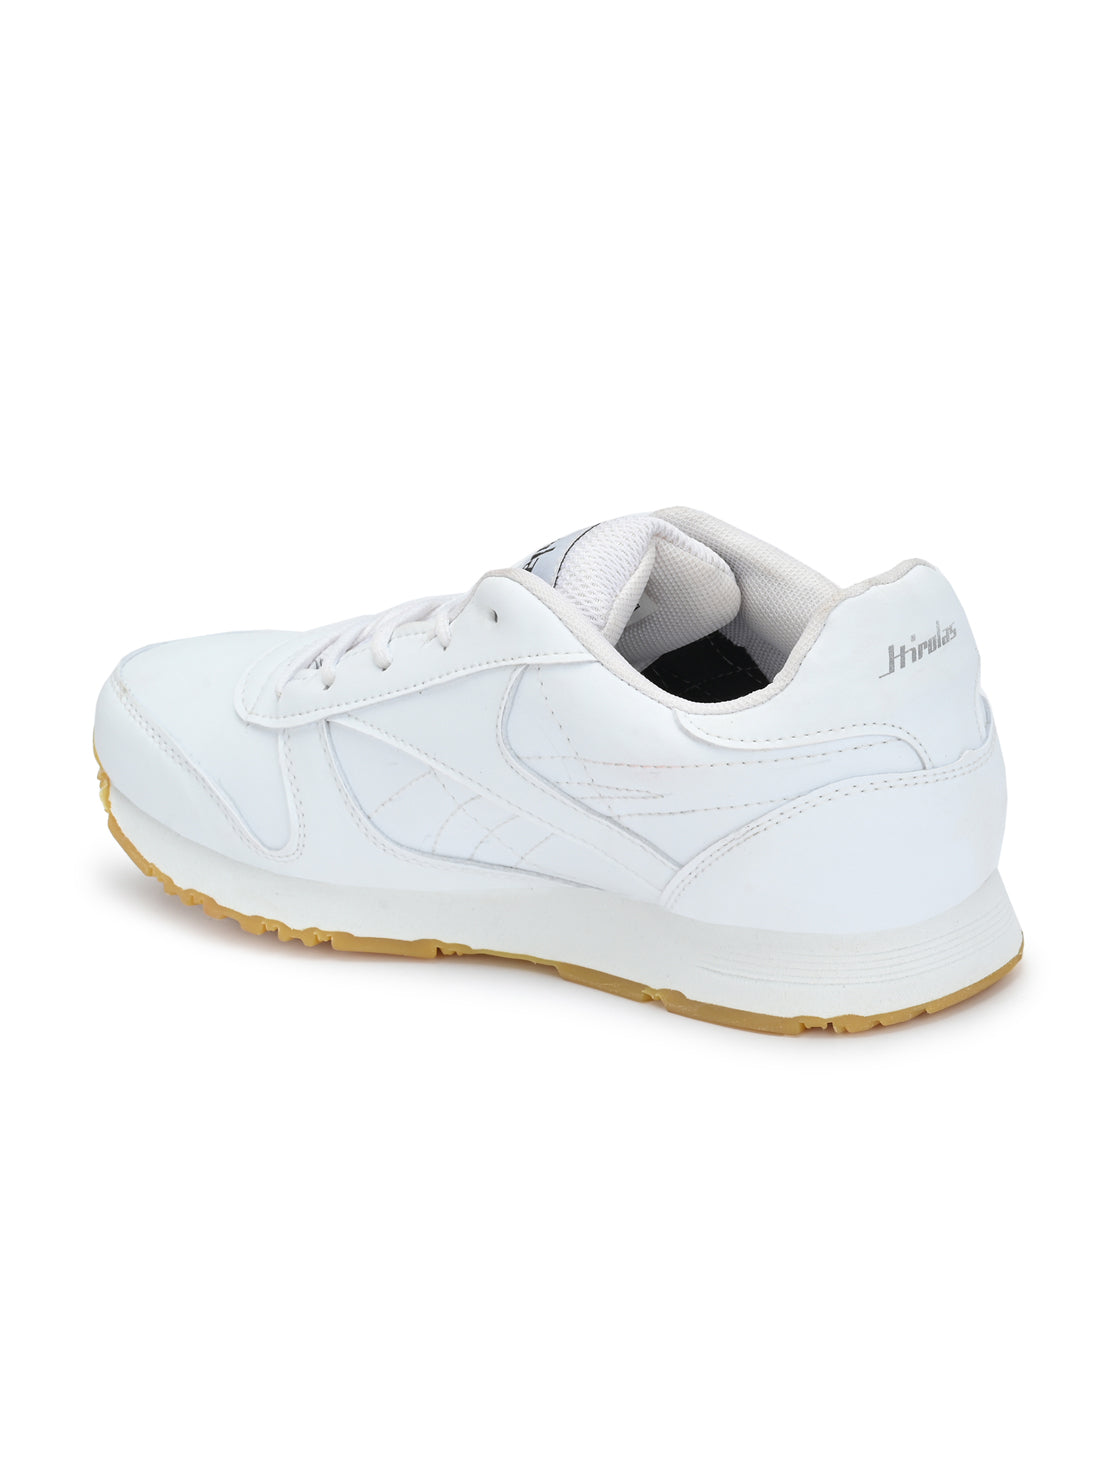 Hirolas® Men's Multisports Shock Absorbing Walking Running Fitness Athletic Training Gym White Lace Up Sneaker Sport Shoes (HRL2001WHN)